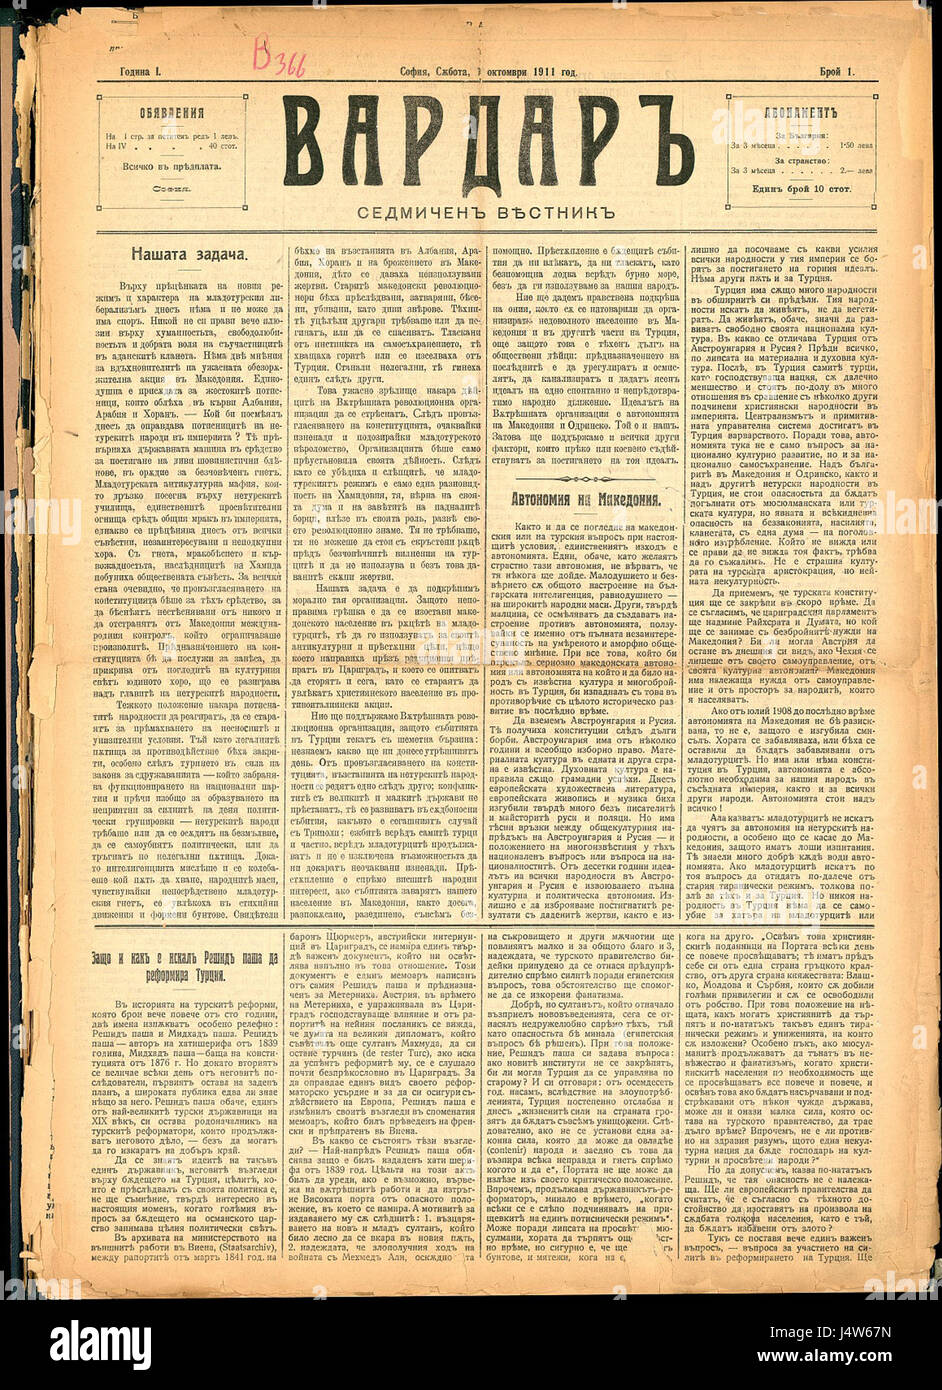 Vardar 1. Oktober 1911 1 Seite Stockfoto